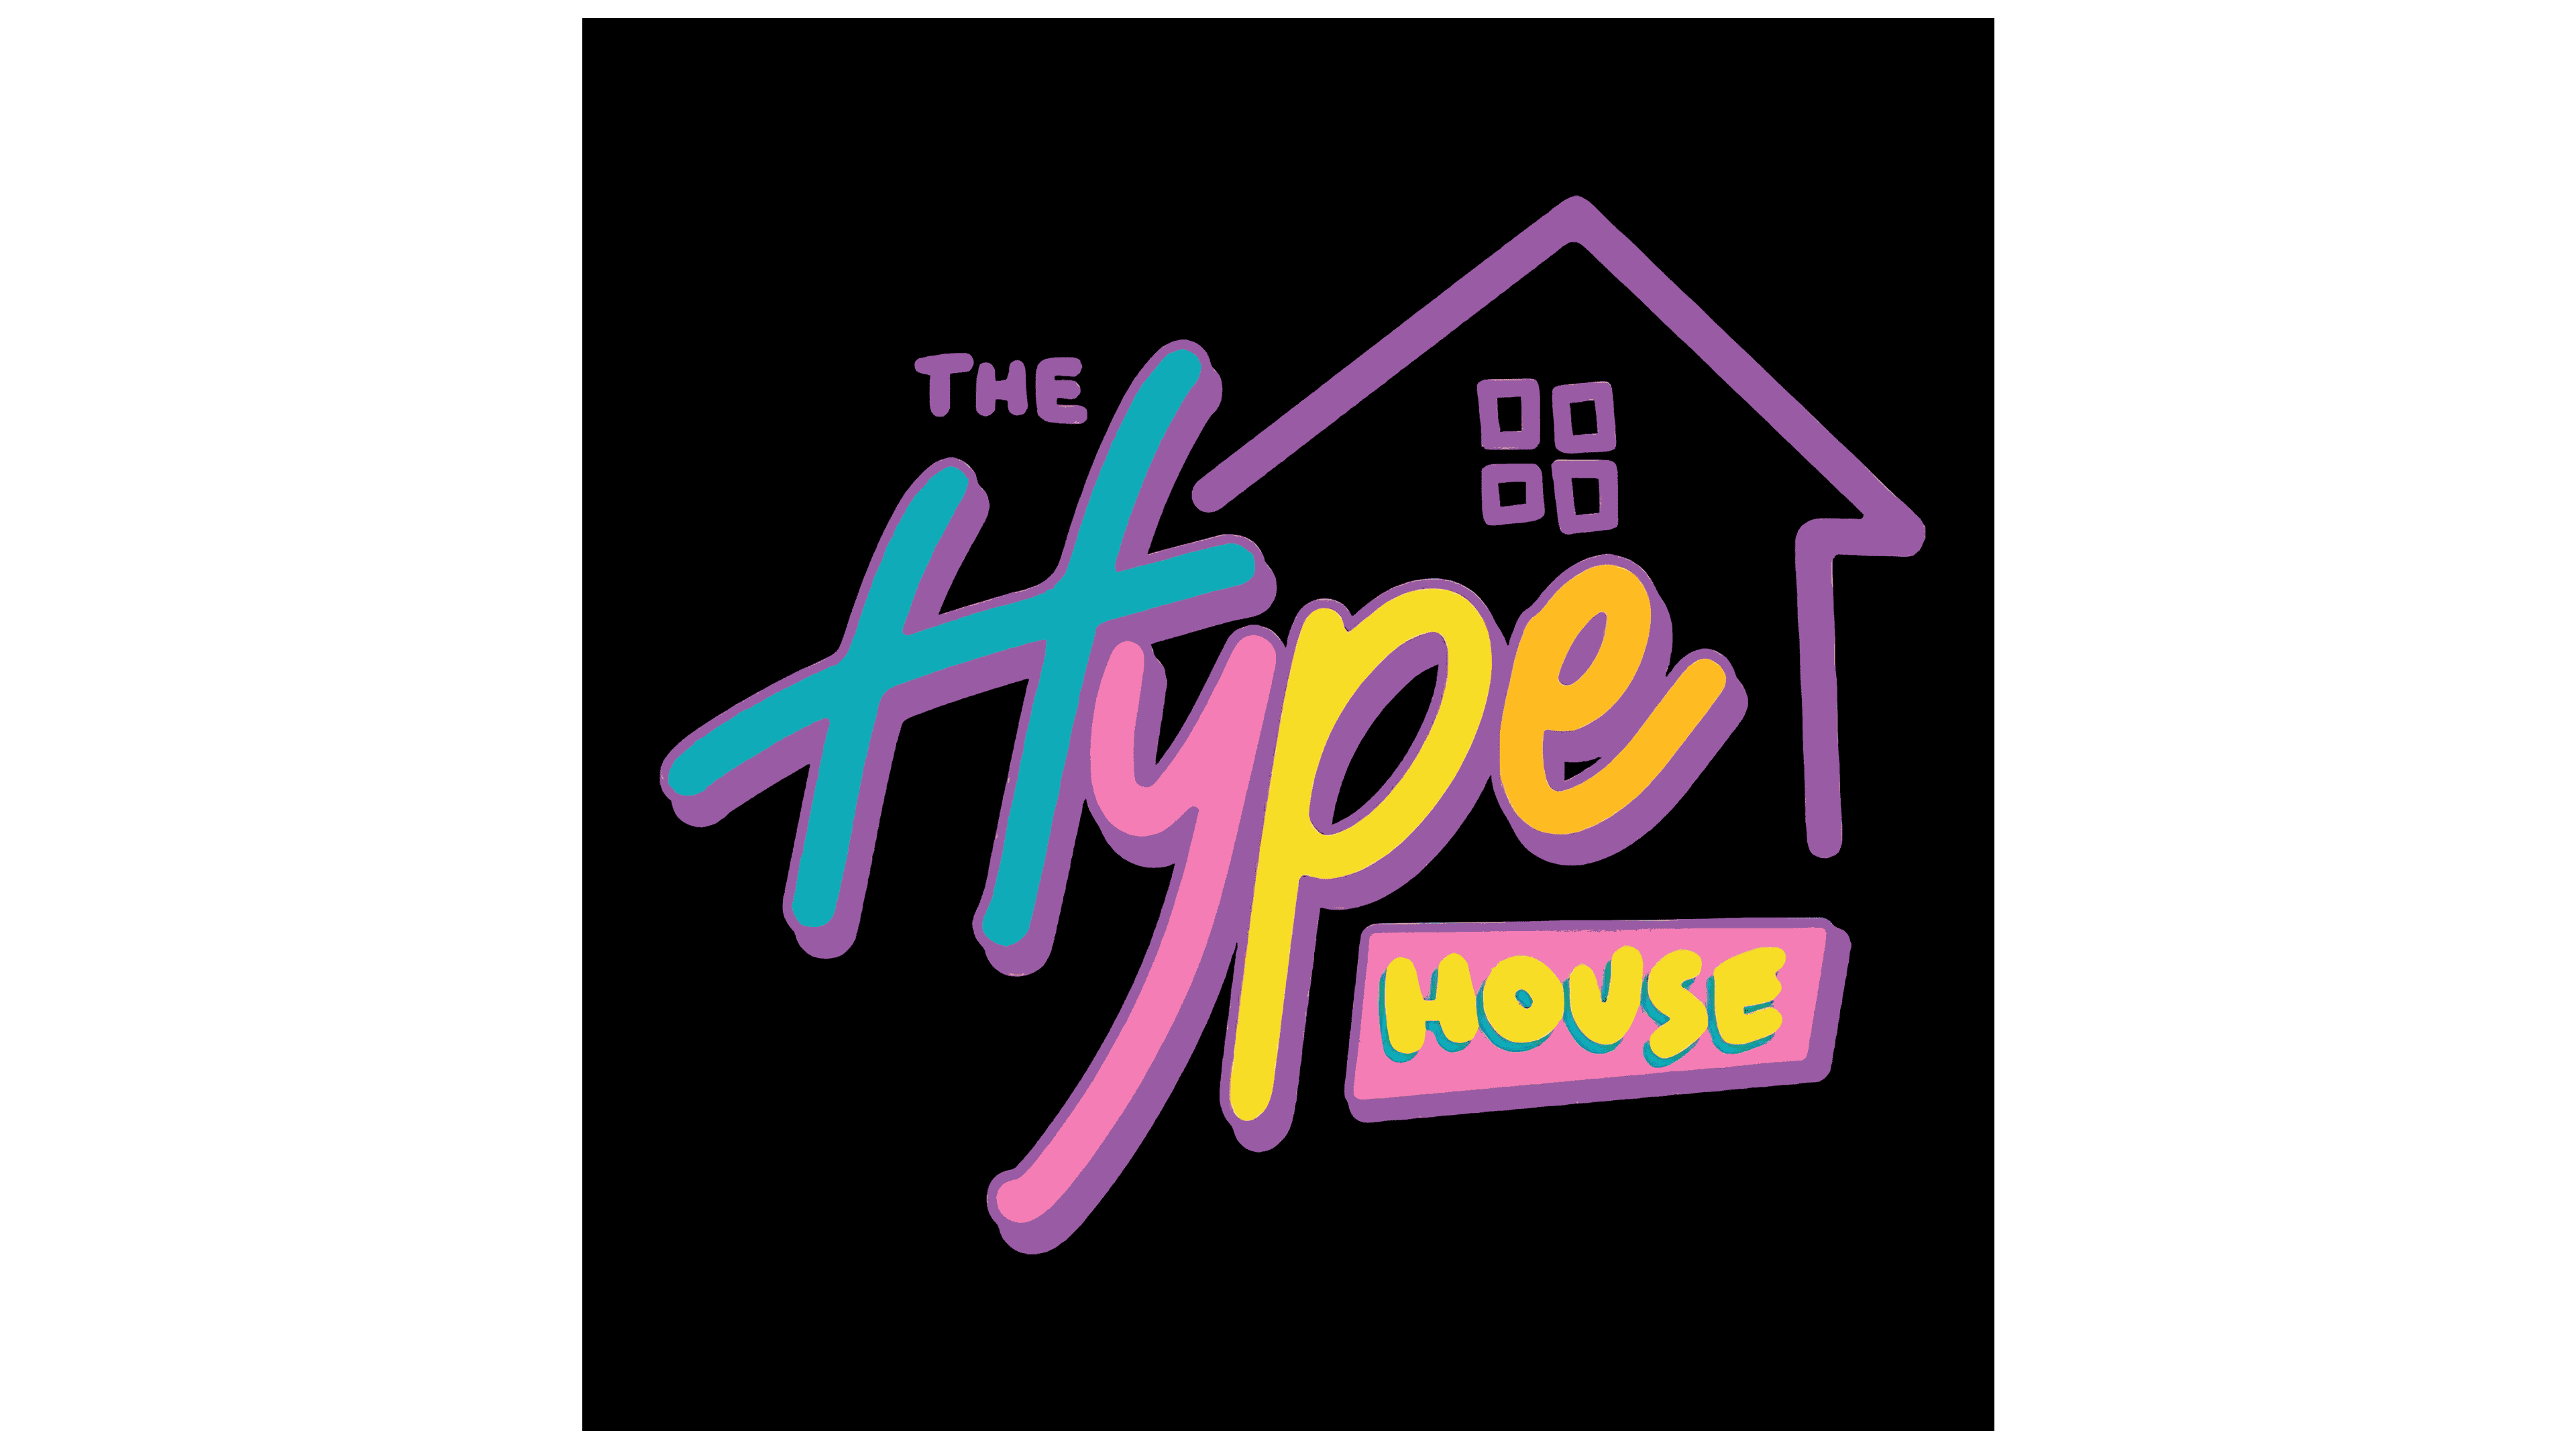 Hype house logo aesthetic